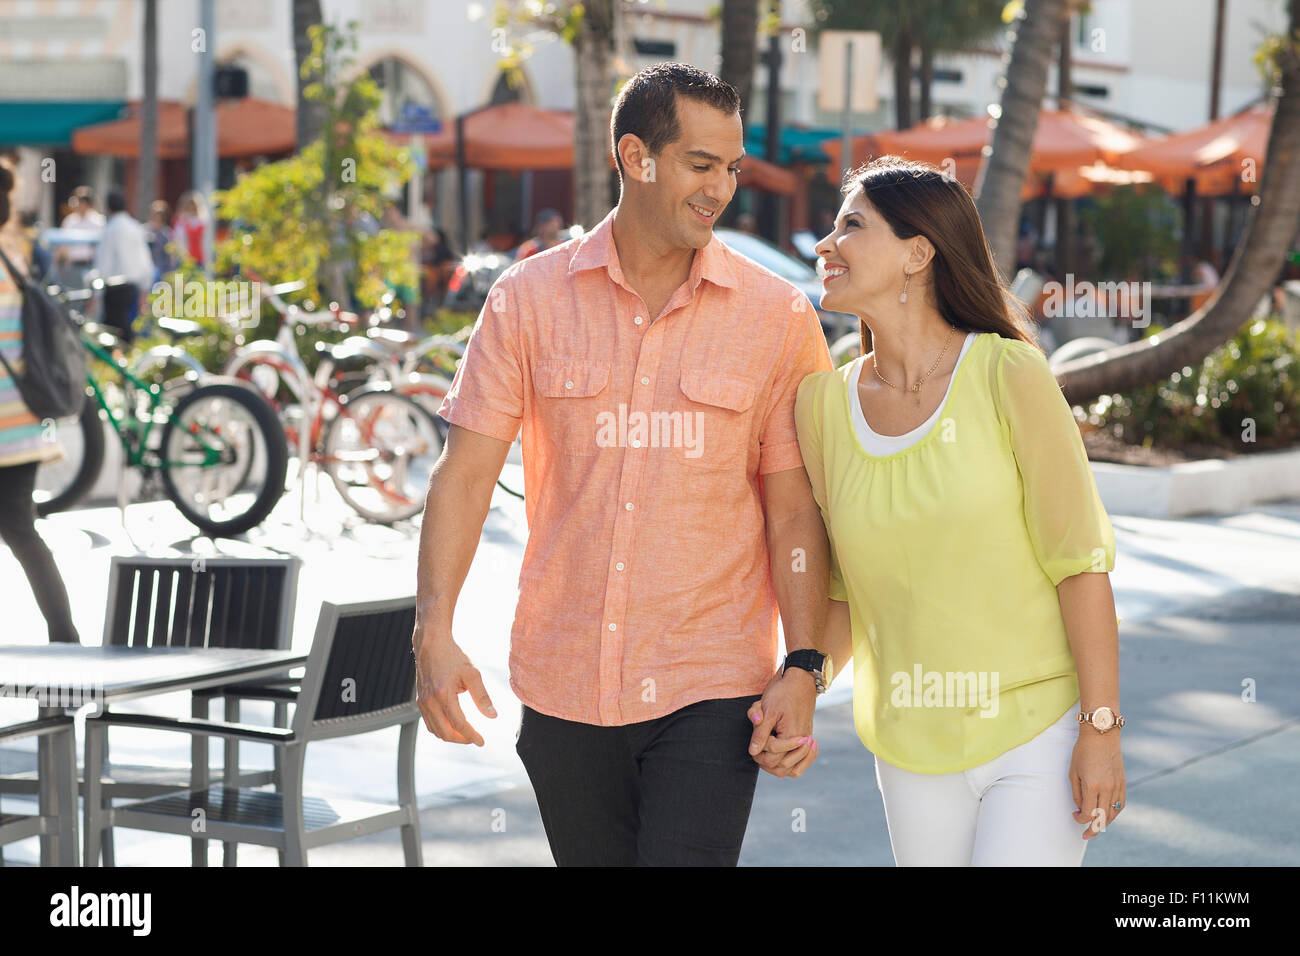 Hispanic couple holding hands on sidewalk Banque D'Images